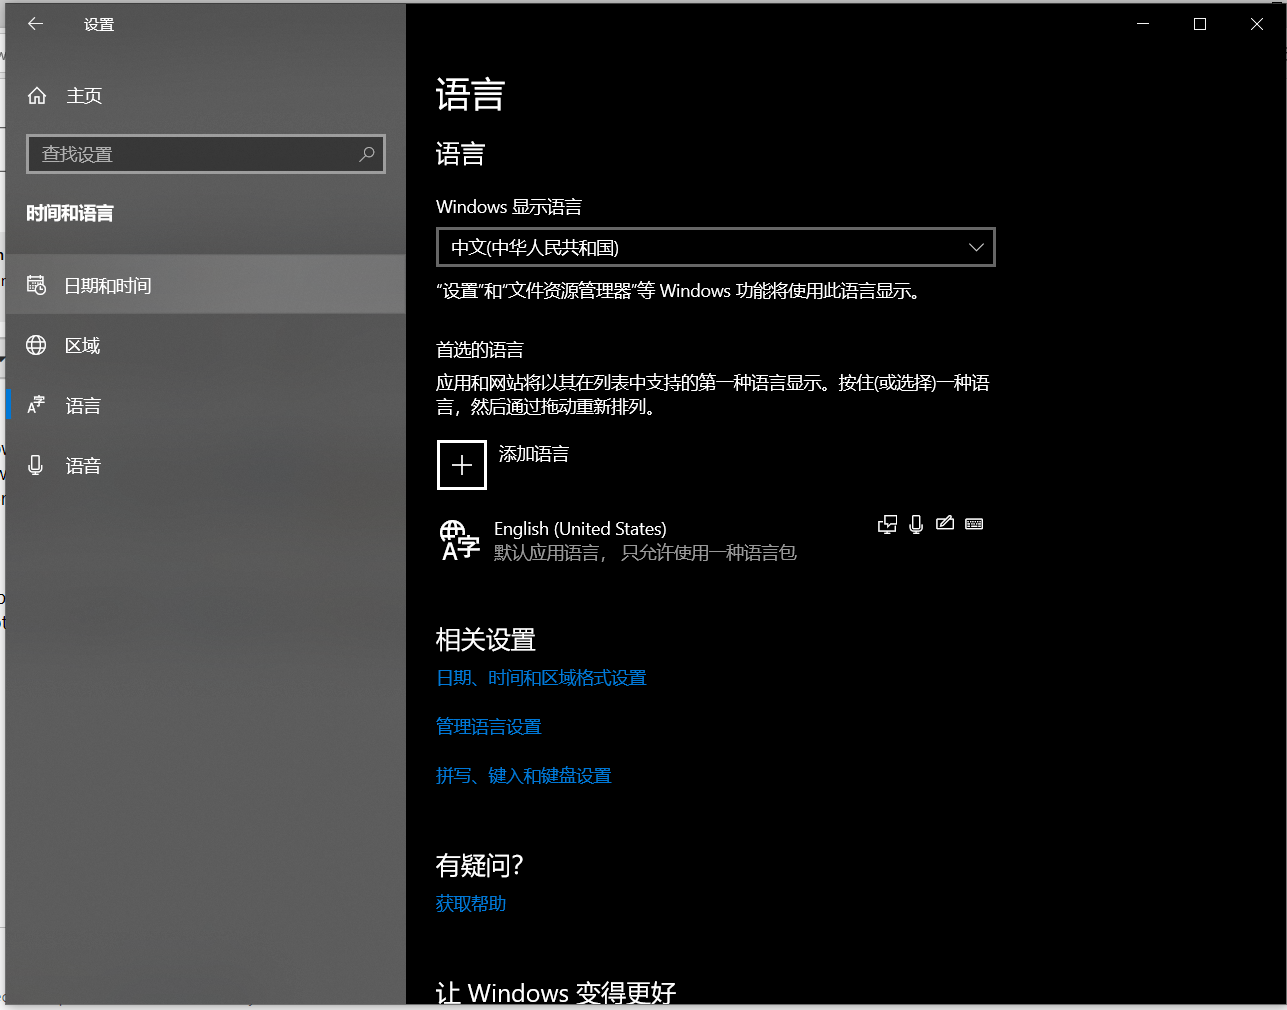 Cannot change my display language on Windows 10 d3e1cd2f-4656-468d-8641-f04c41ff5eef?upload=true.png